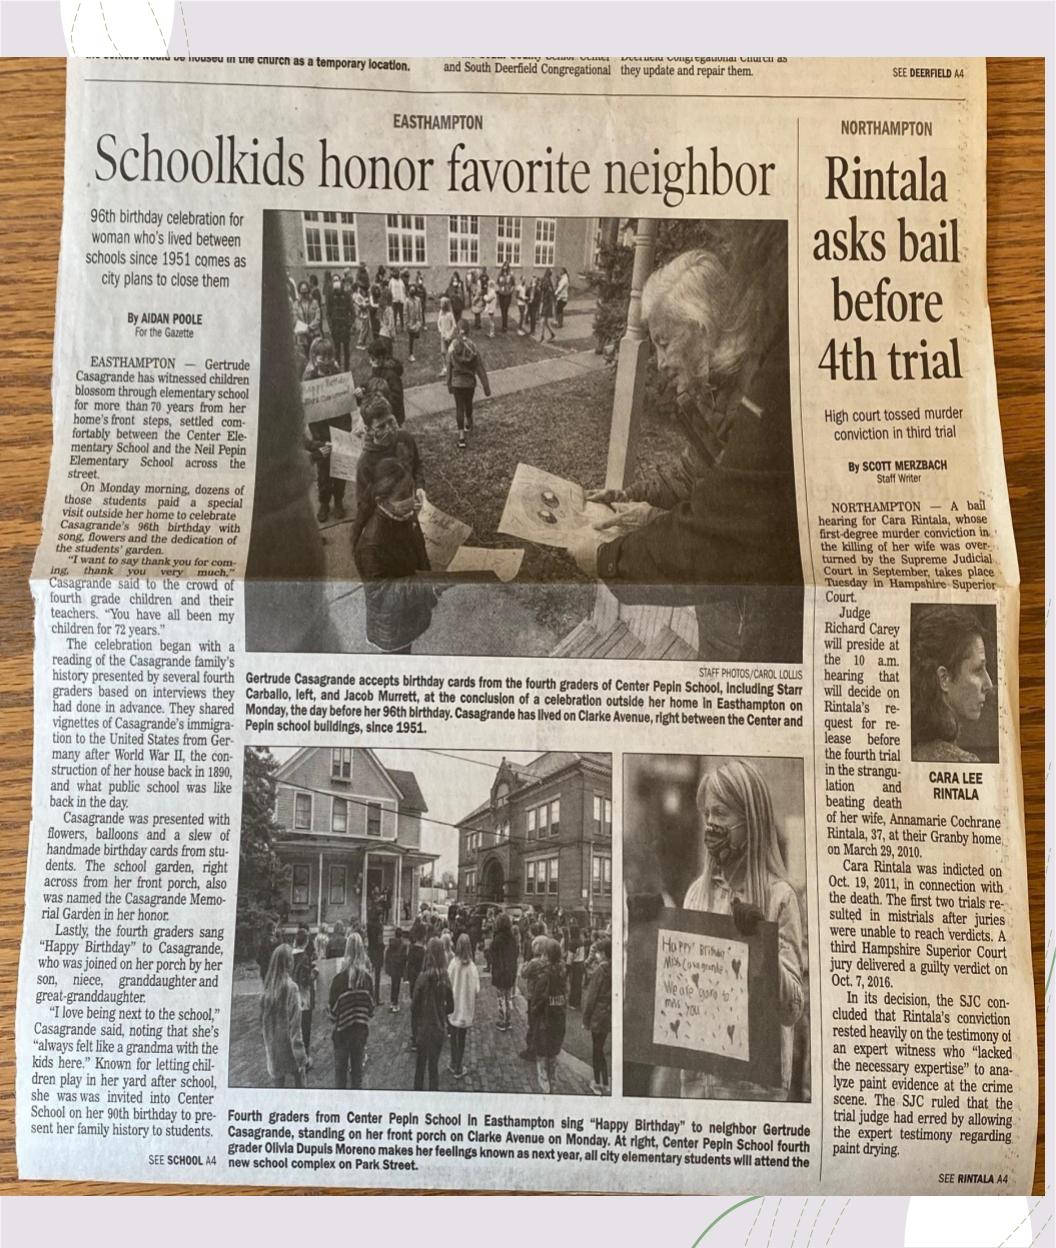 Newspaper with photos of school children celebrating elderly neighbor